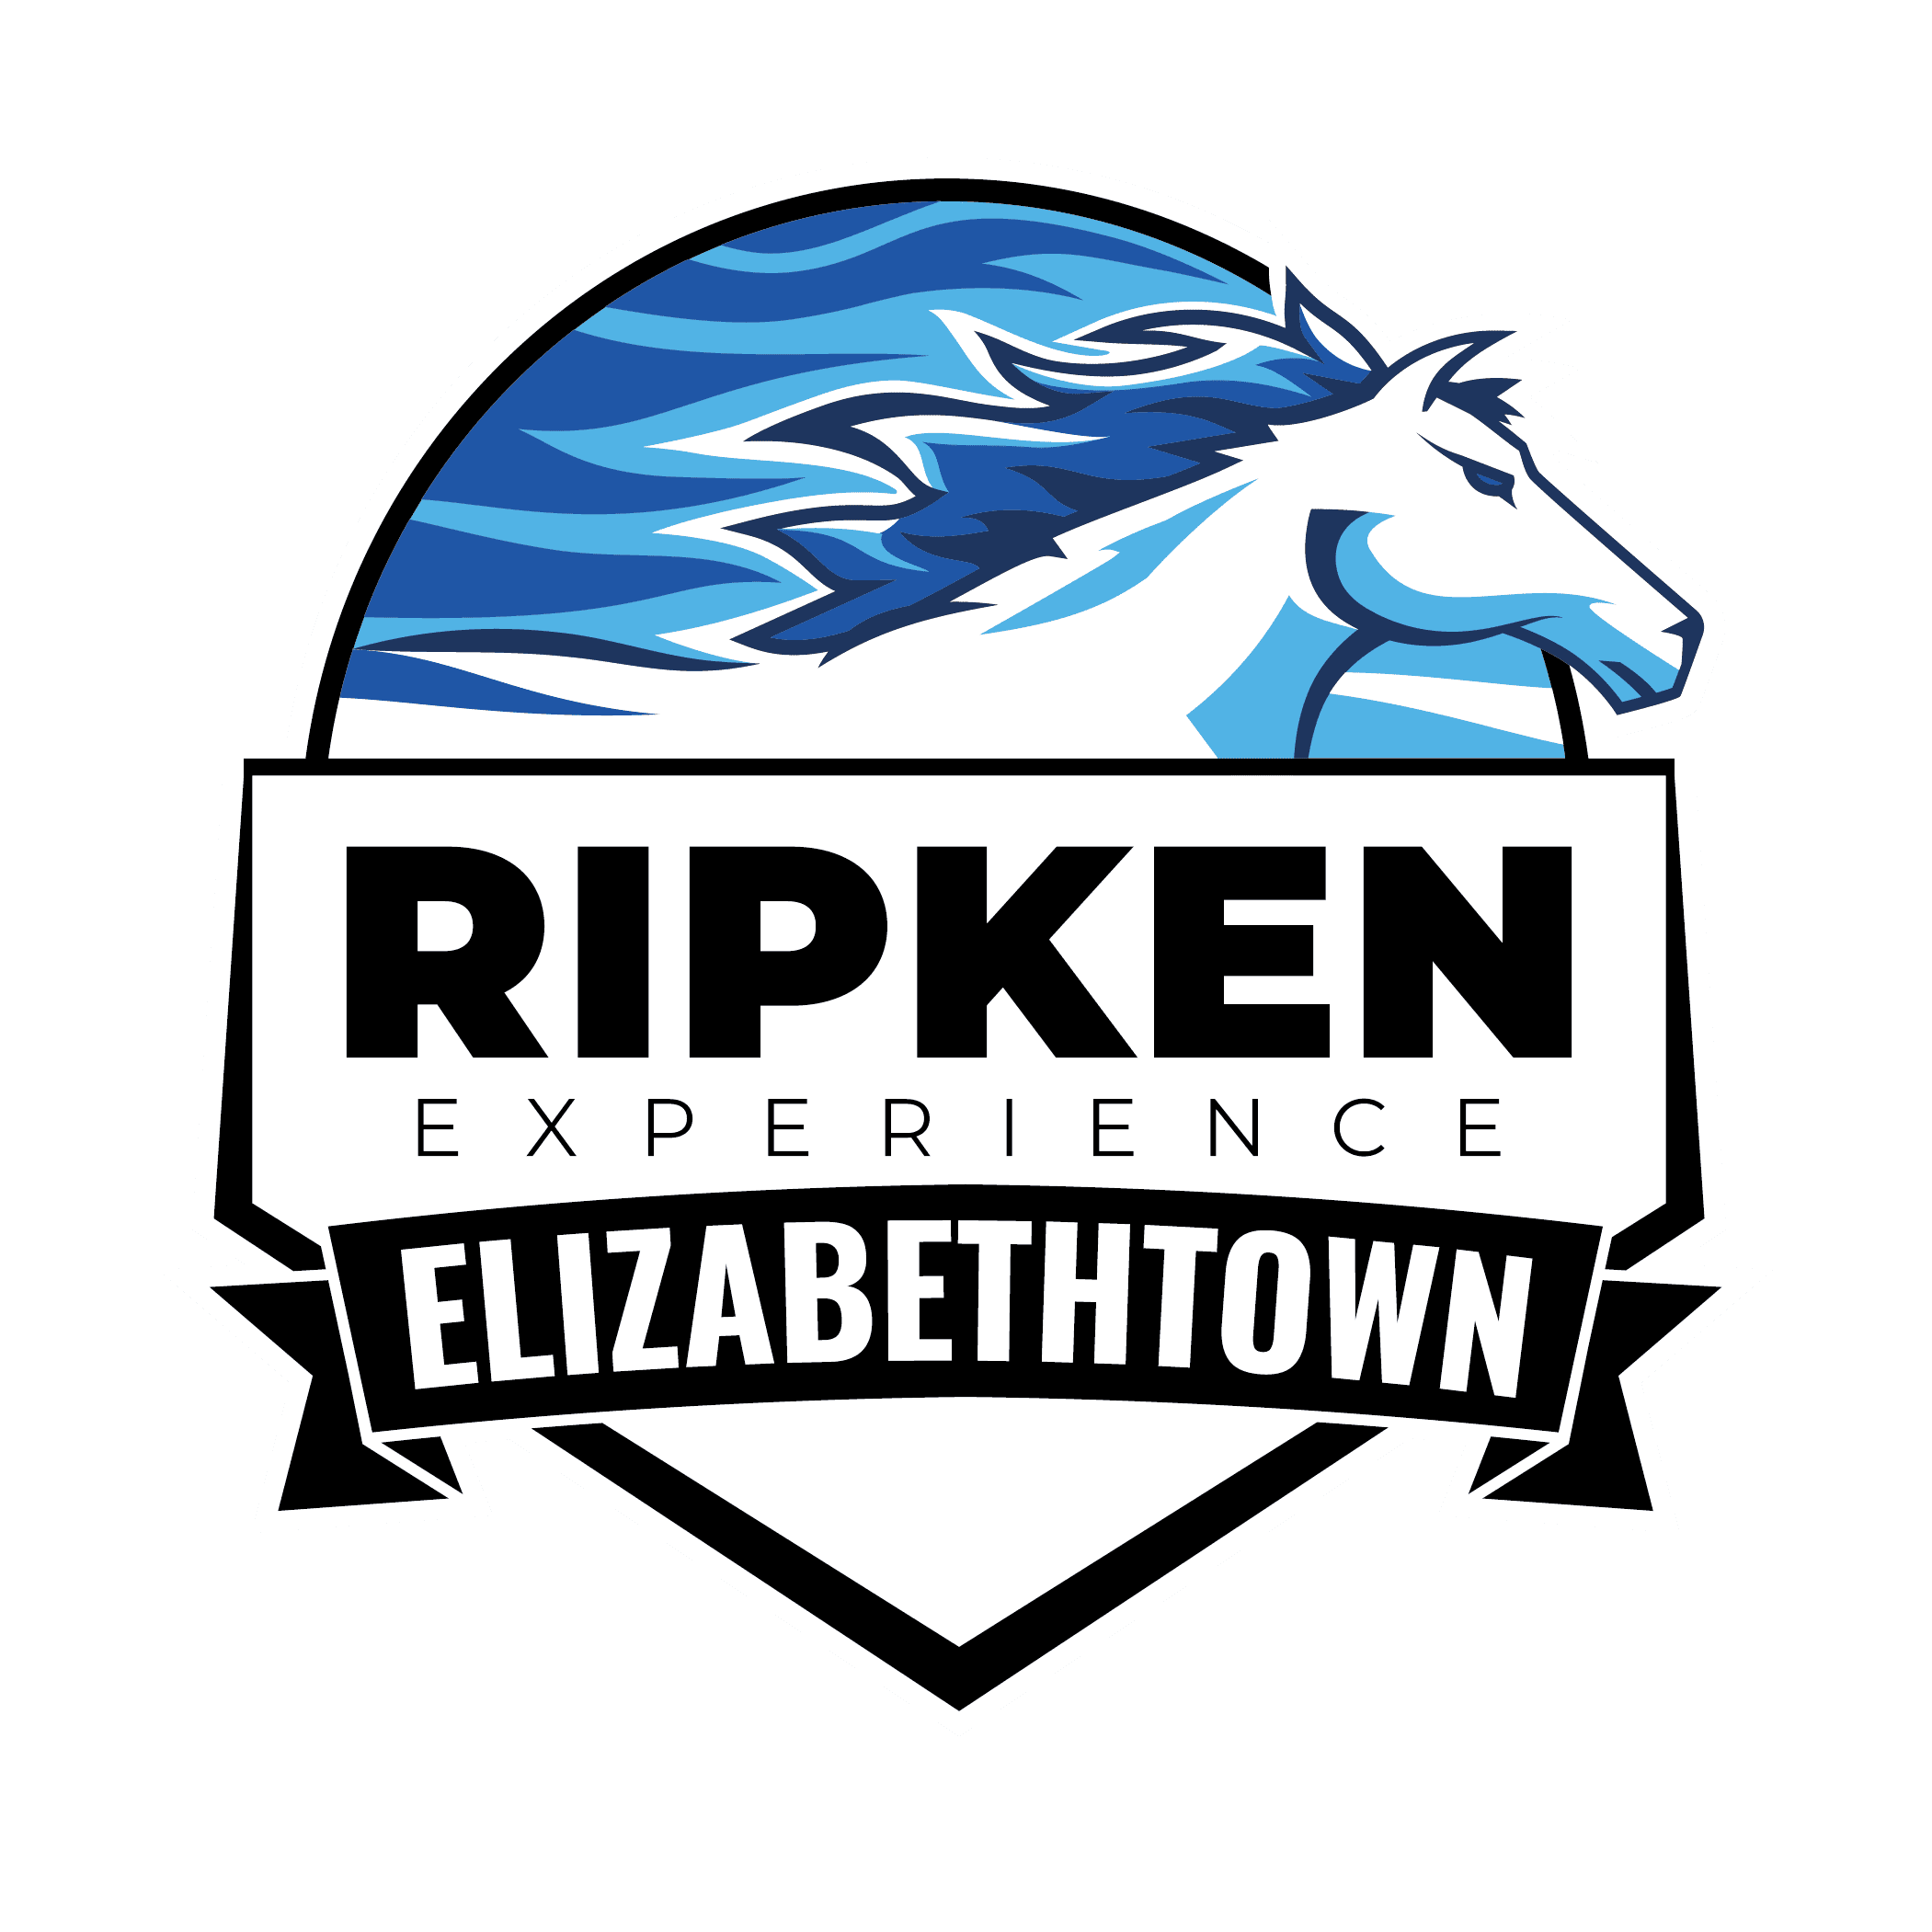 Ripken Elizabethtown KY baseball tournaments